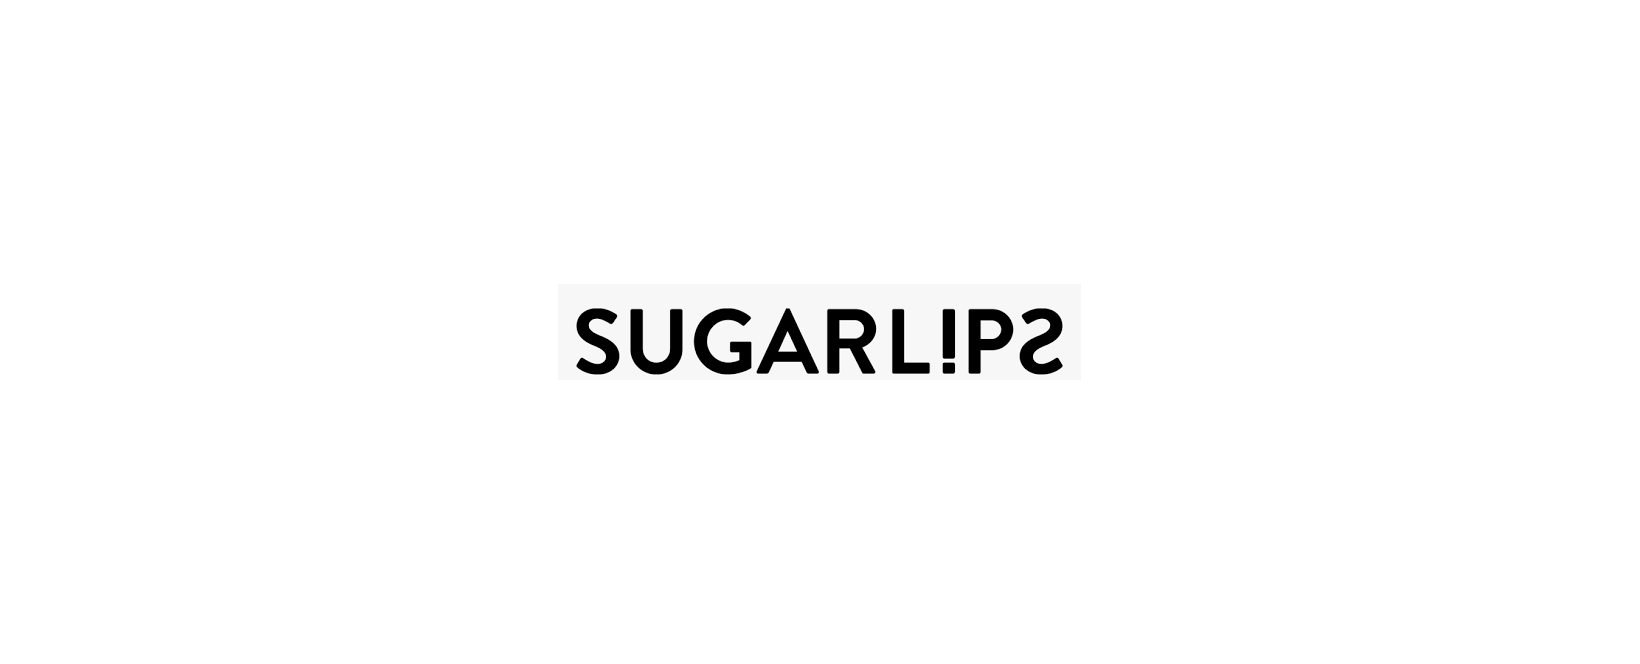 Sugarlips Discount Code 2022